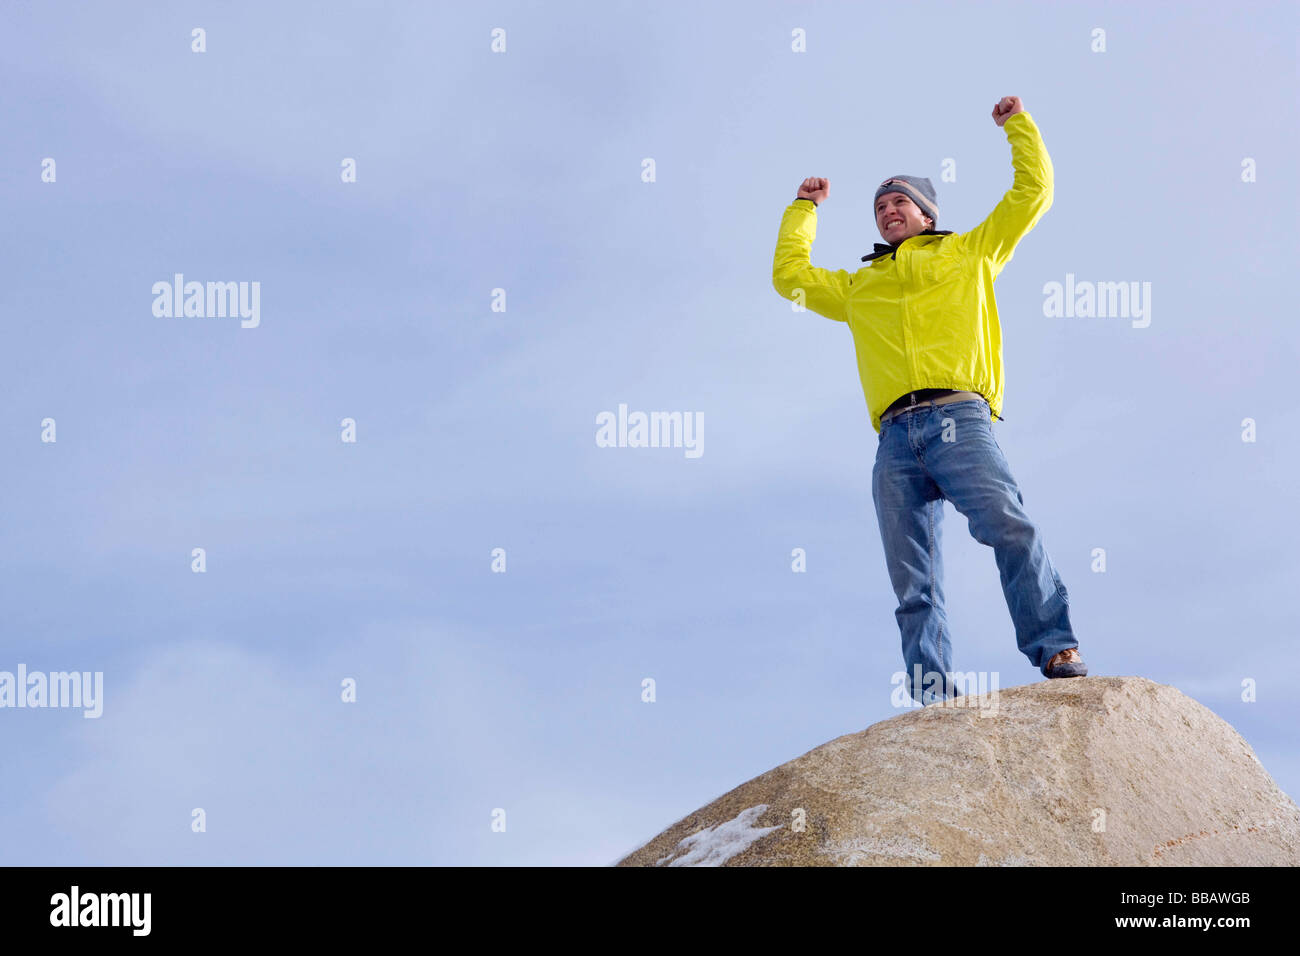 Climber celebrating on mountain peak Stock Photo